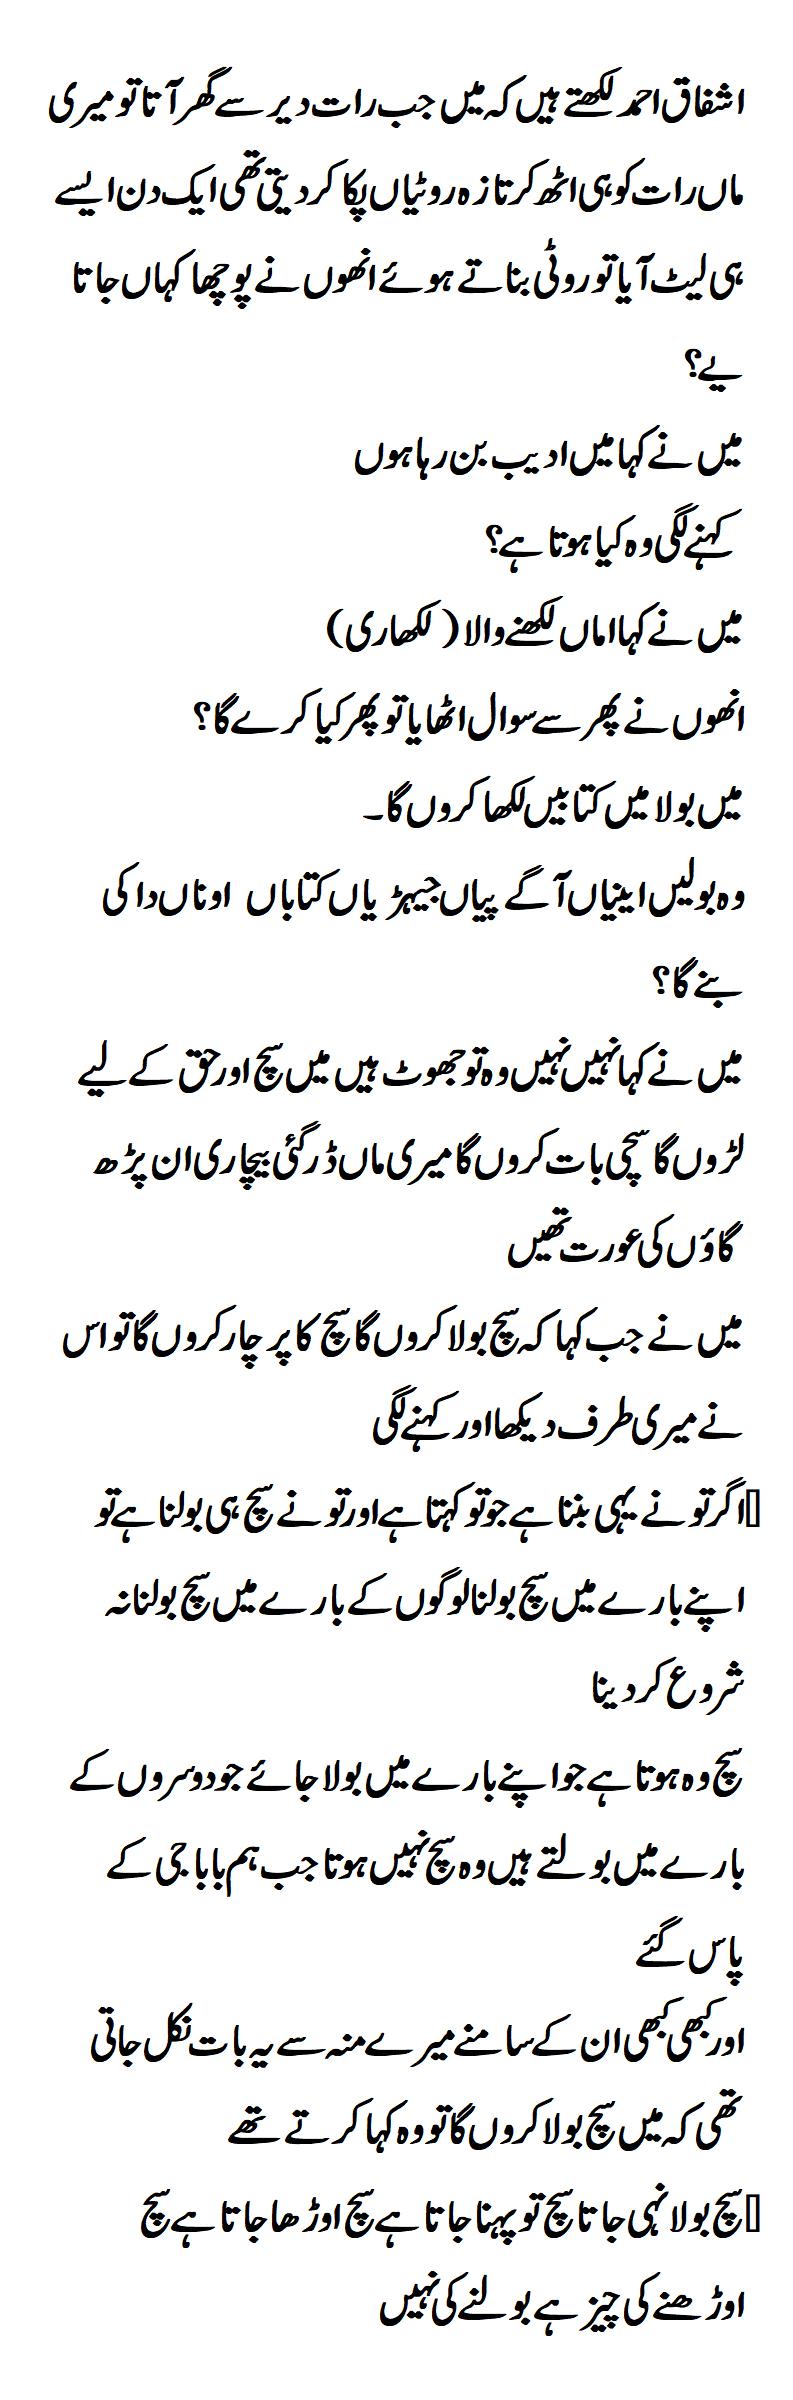 All writings of Ashfaq Ahmad